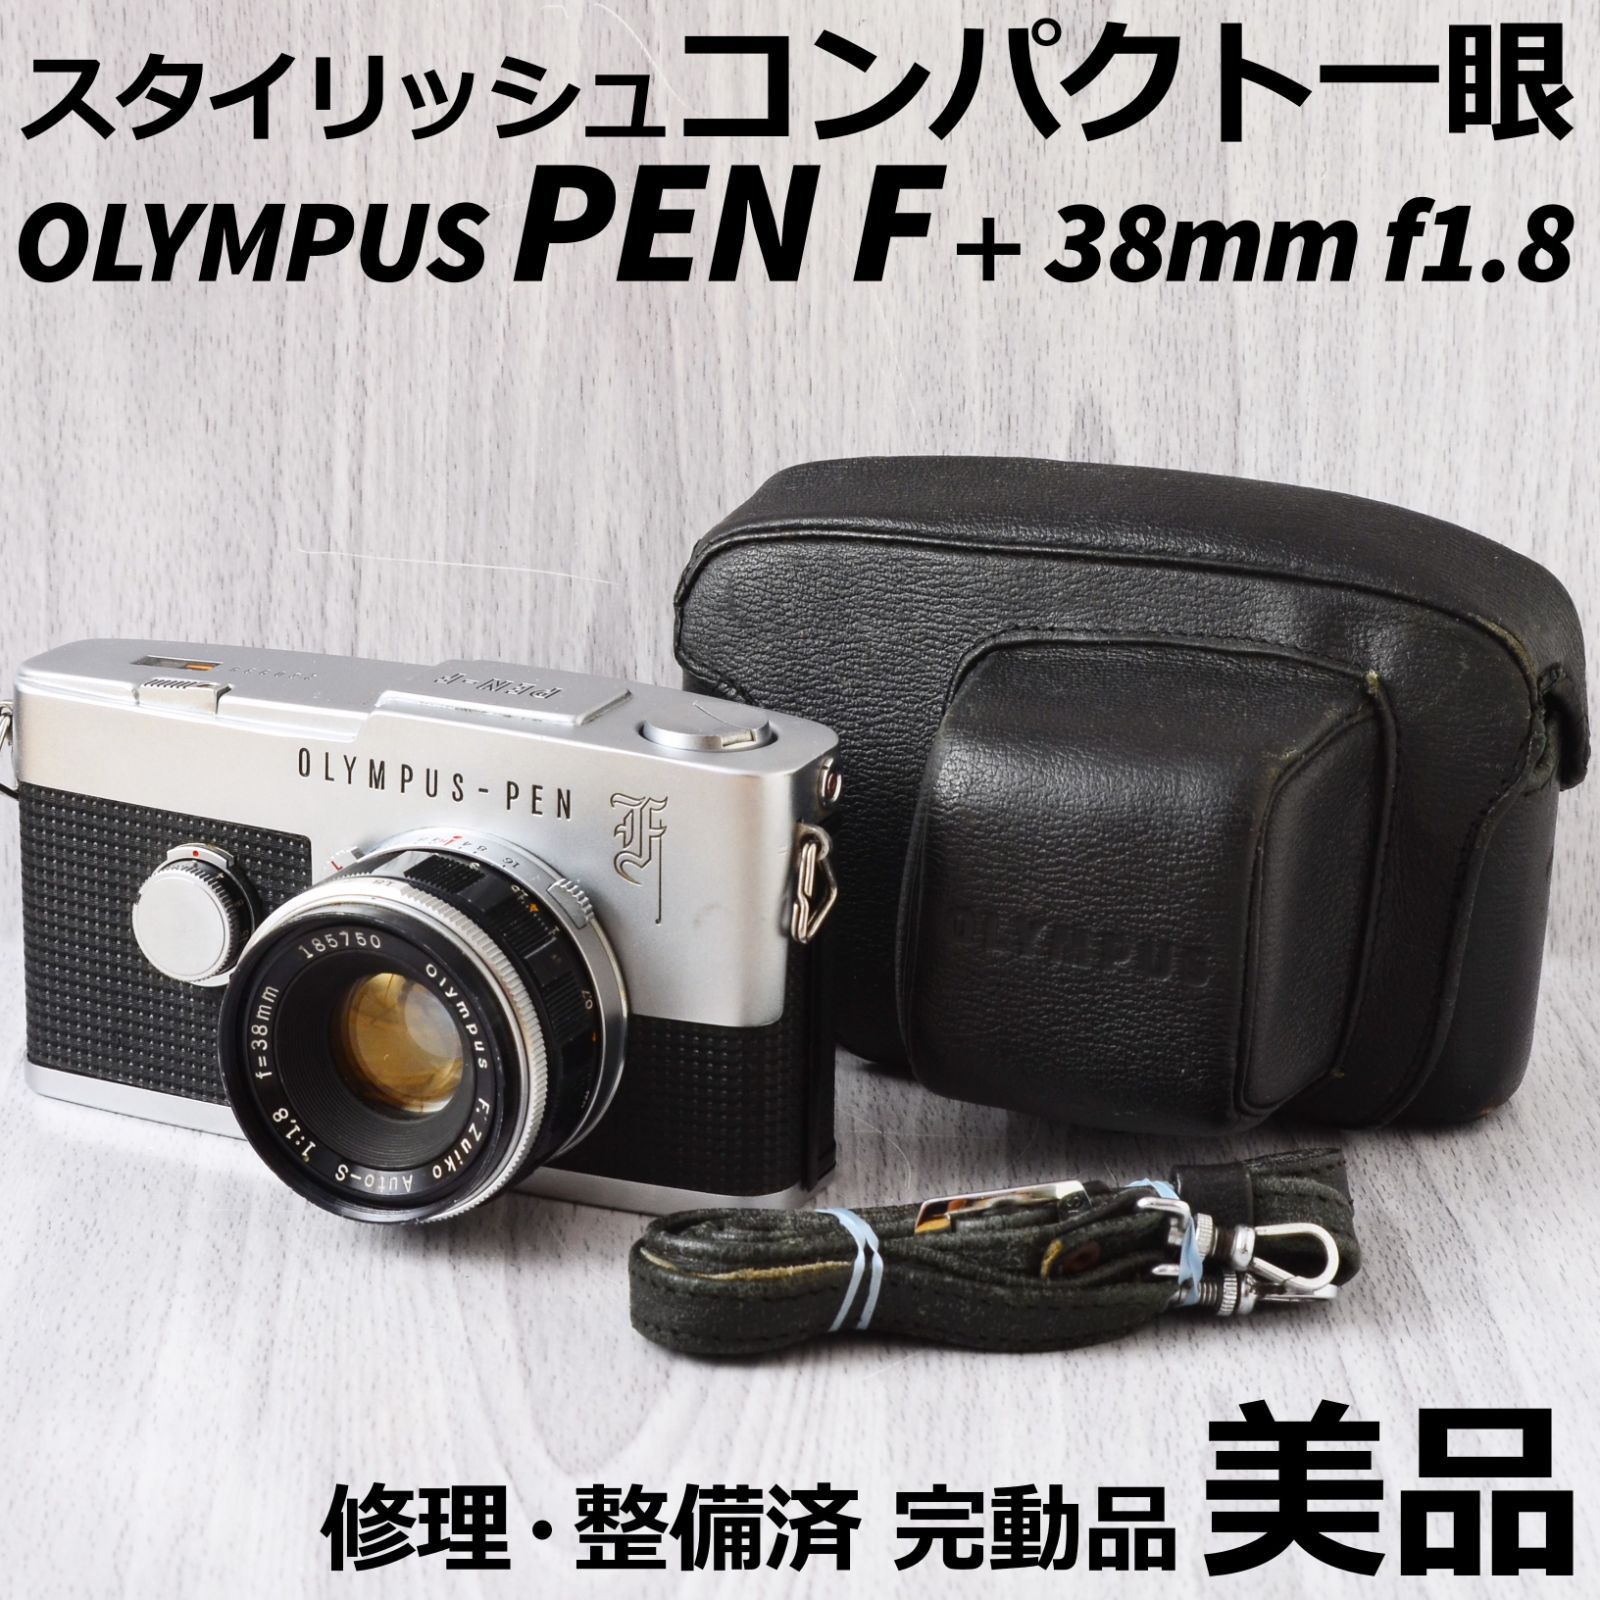 美品 OLYMPUS PEN F + 38mm f1.8 ケース付 修理・整備済-